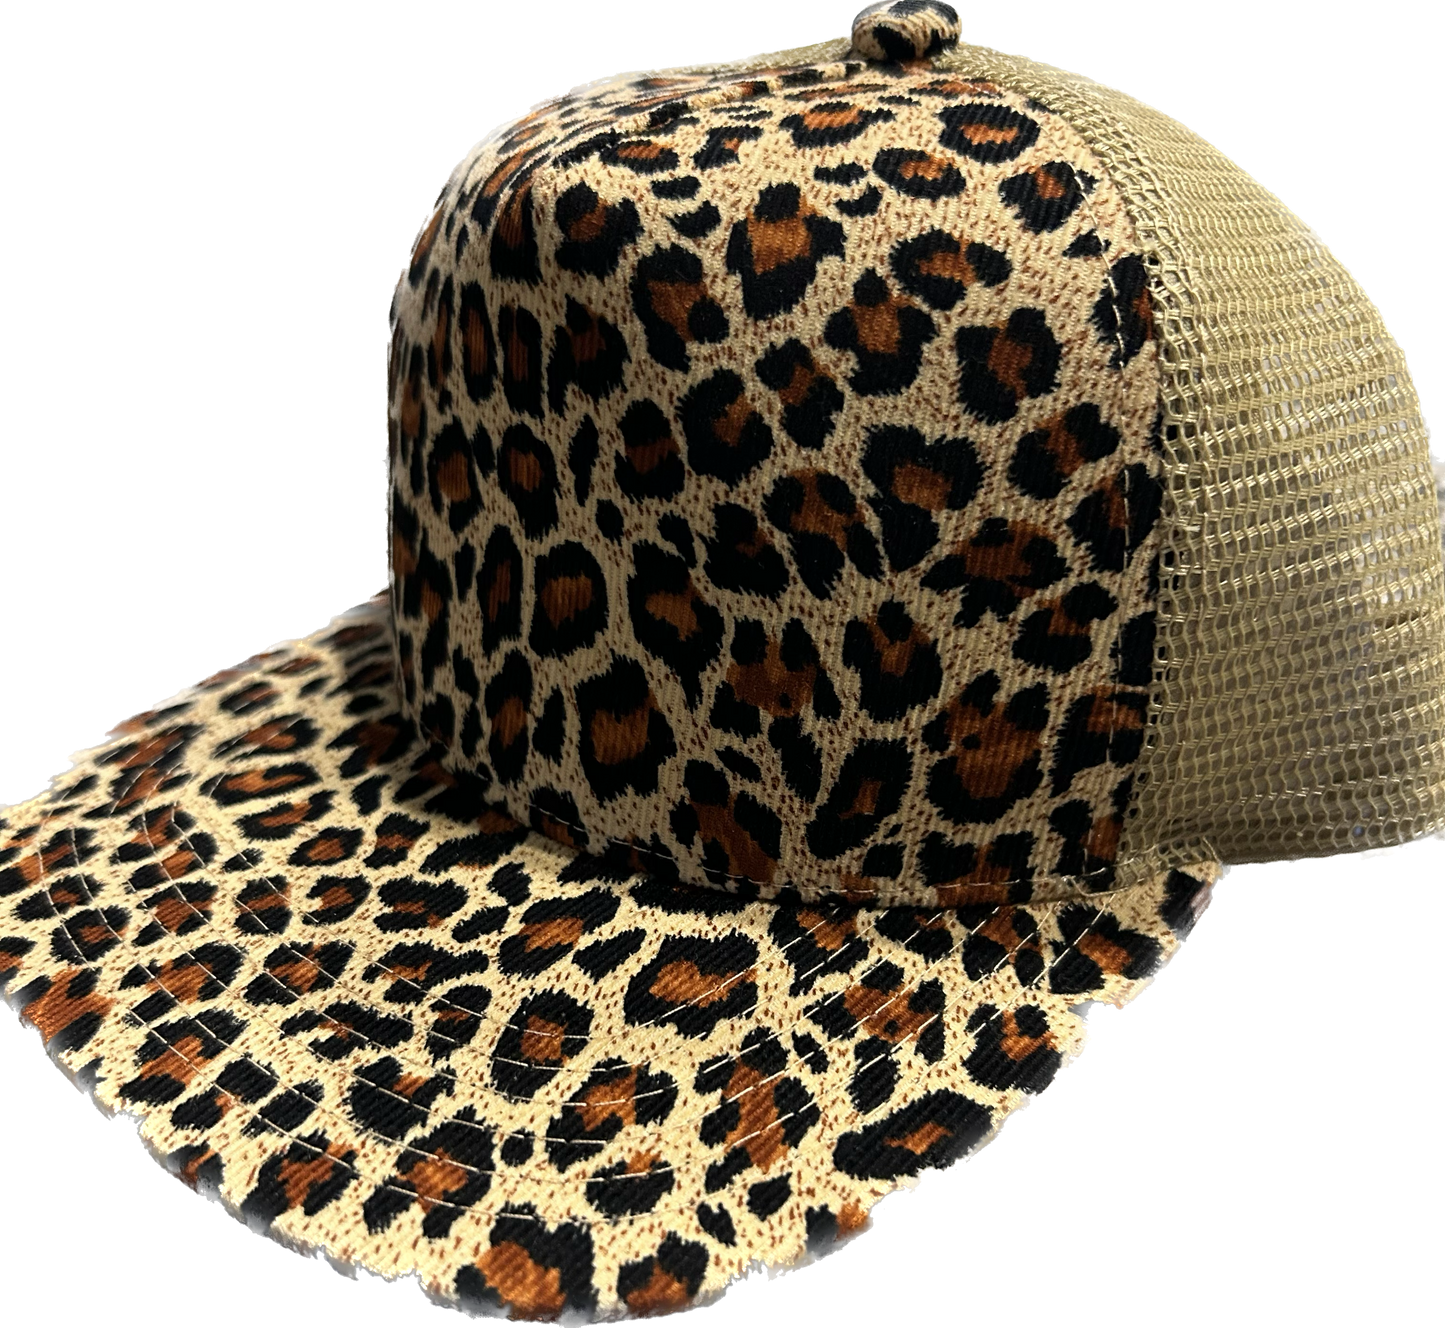 Leopard Mesh SnapBack Hat